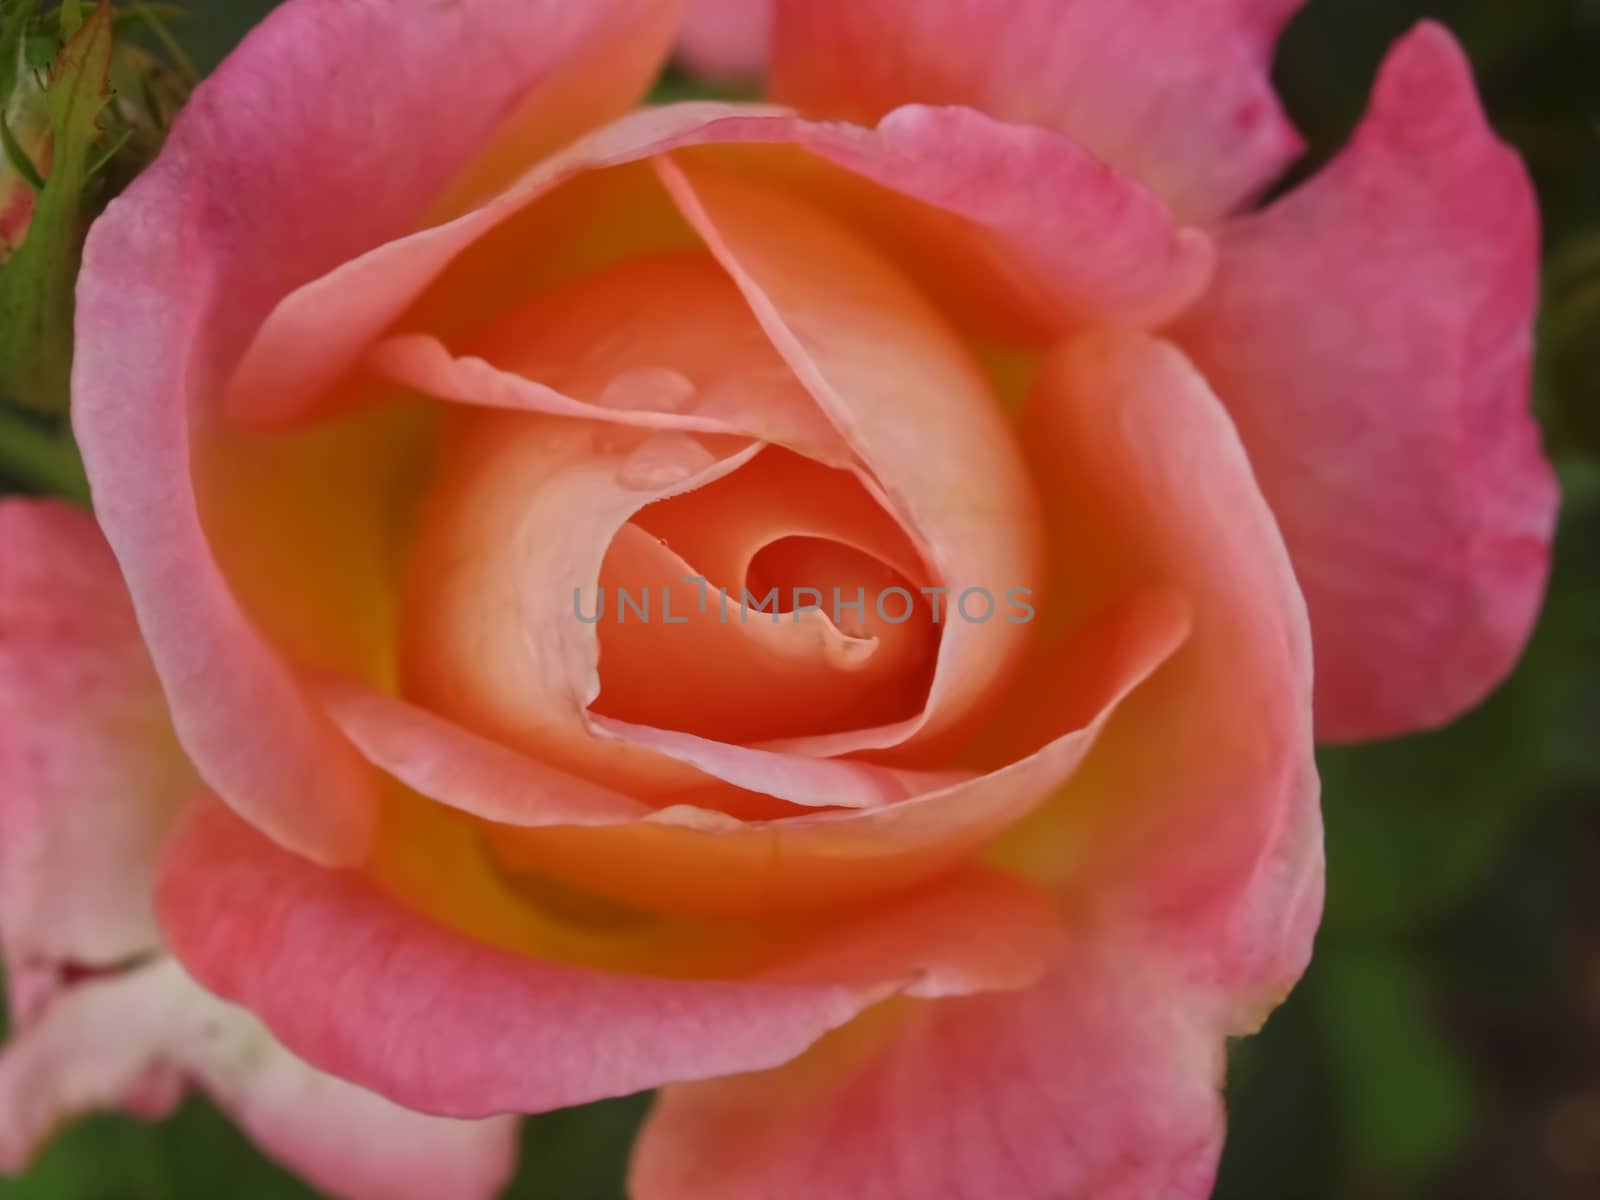 In love with pink roses by Stimmungsbilder